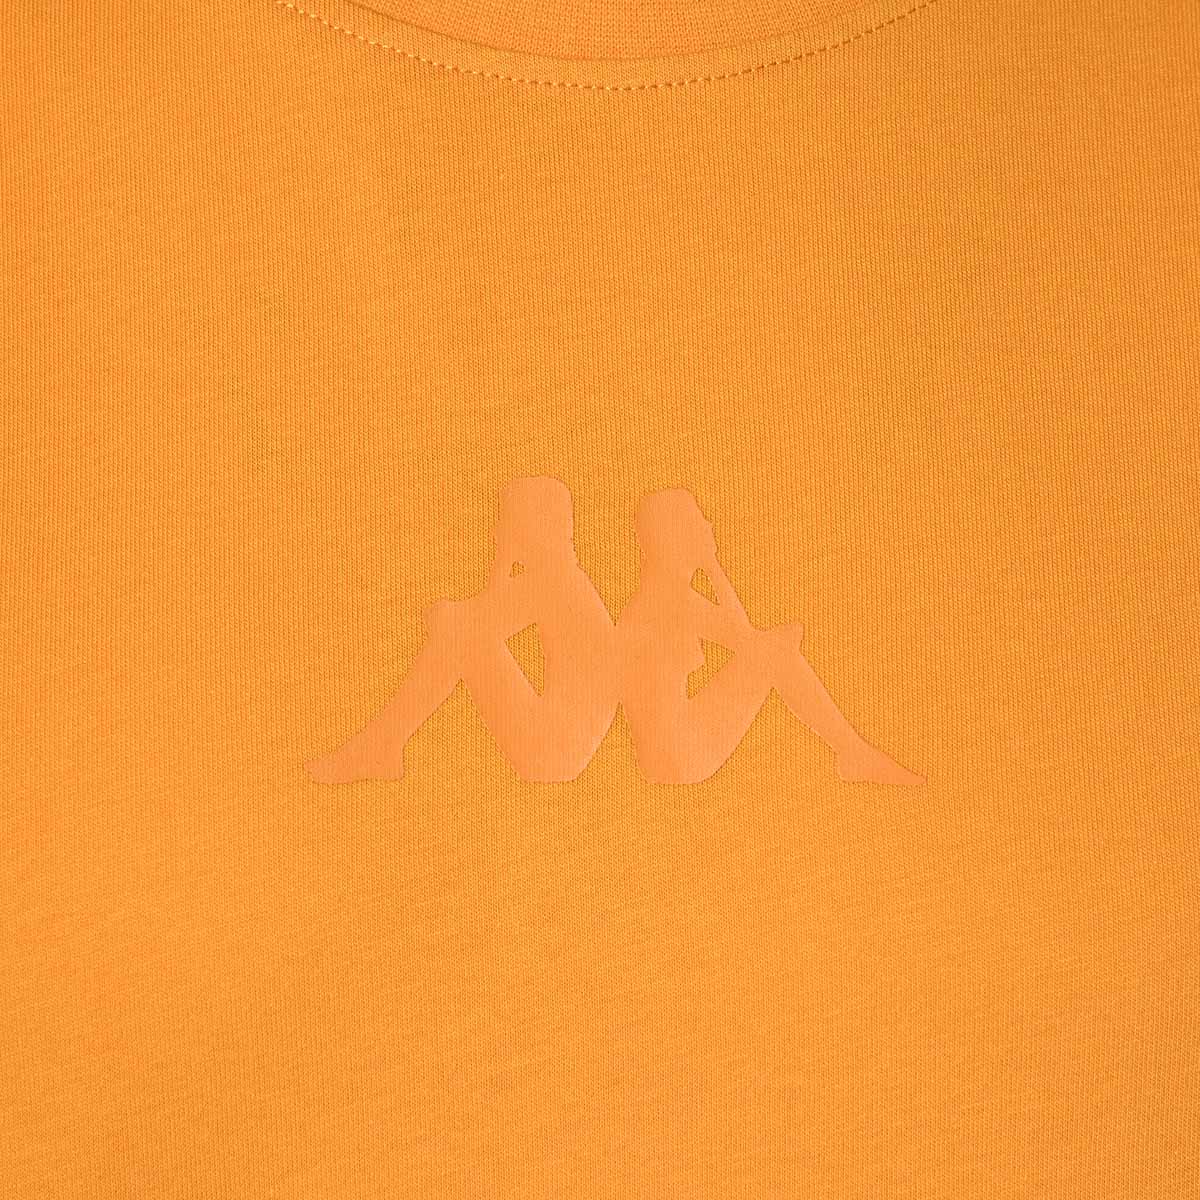 T-shirt Tikki Authentic Orange Homme